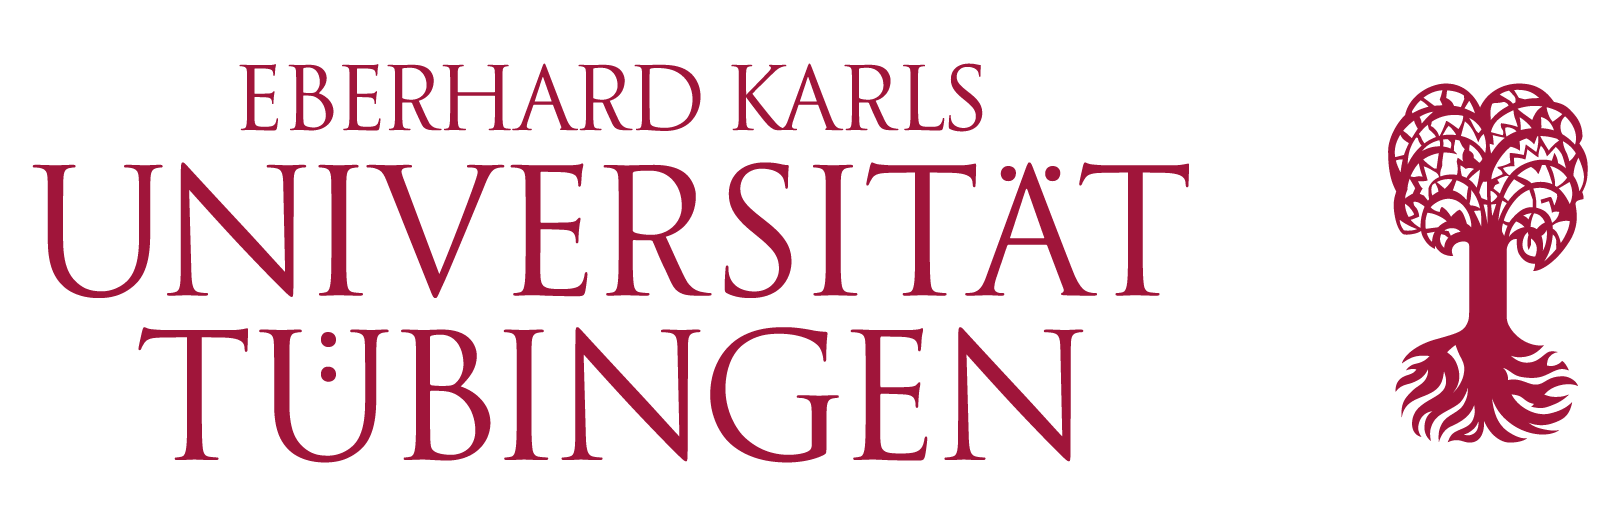 University of Tübingen logo